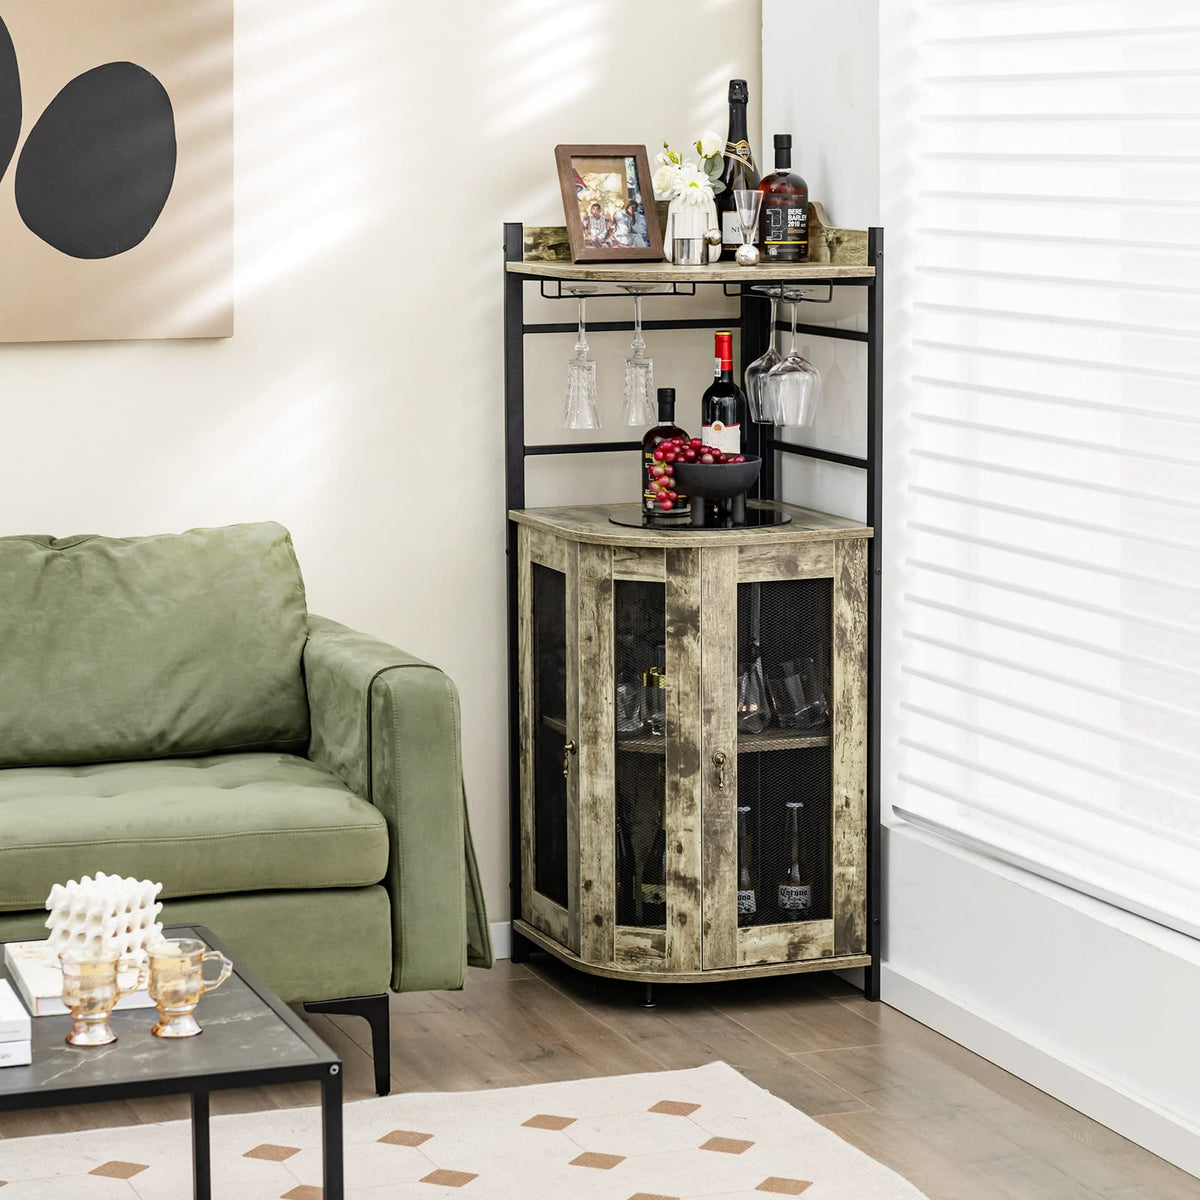 Giantex Corner Bar Cabinet with Glass Holder, Industrial Wine Cabinet with Metal Mesh Doors